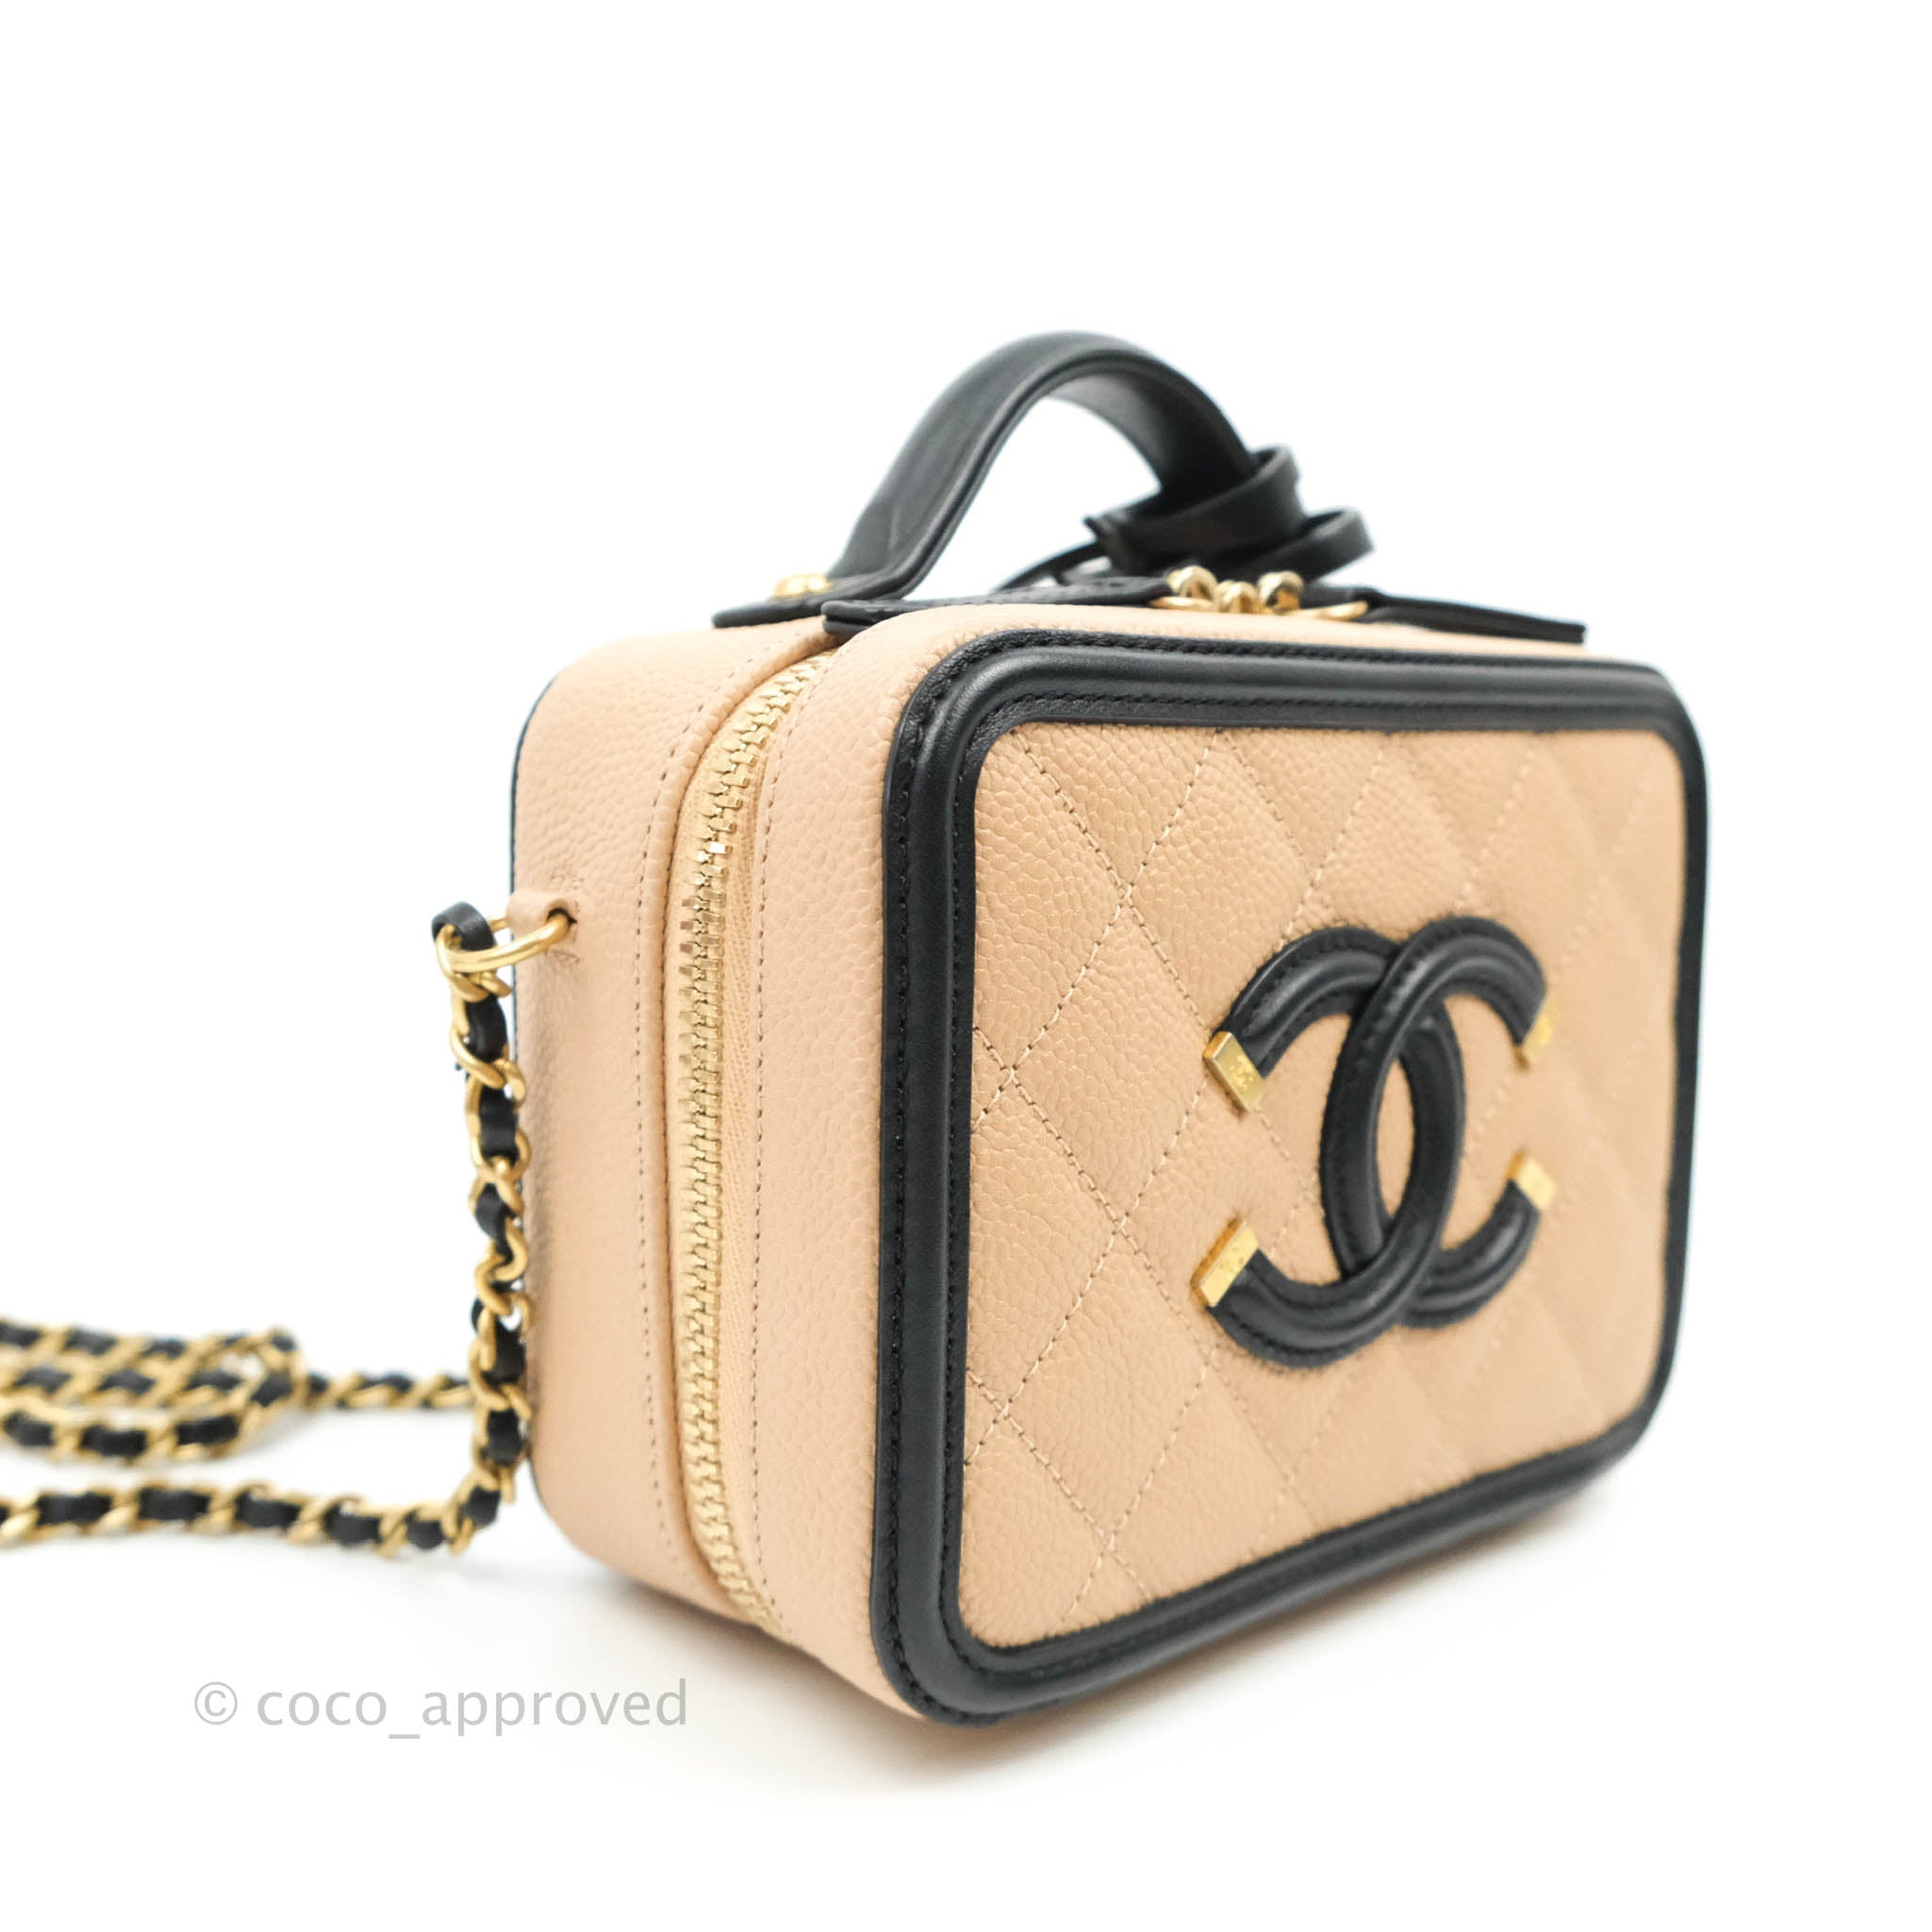 Chanel CC Filigree Vanity Case